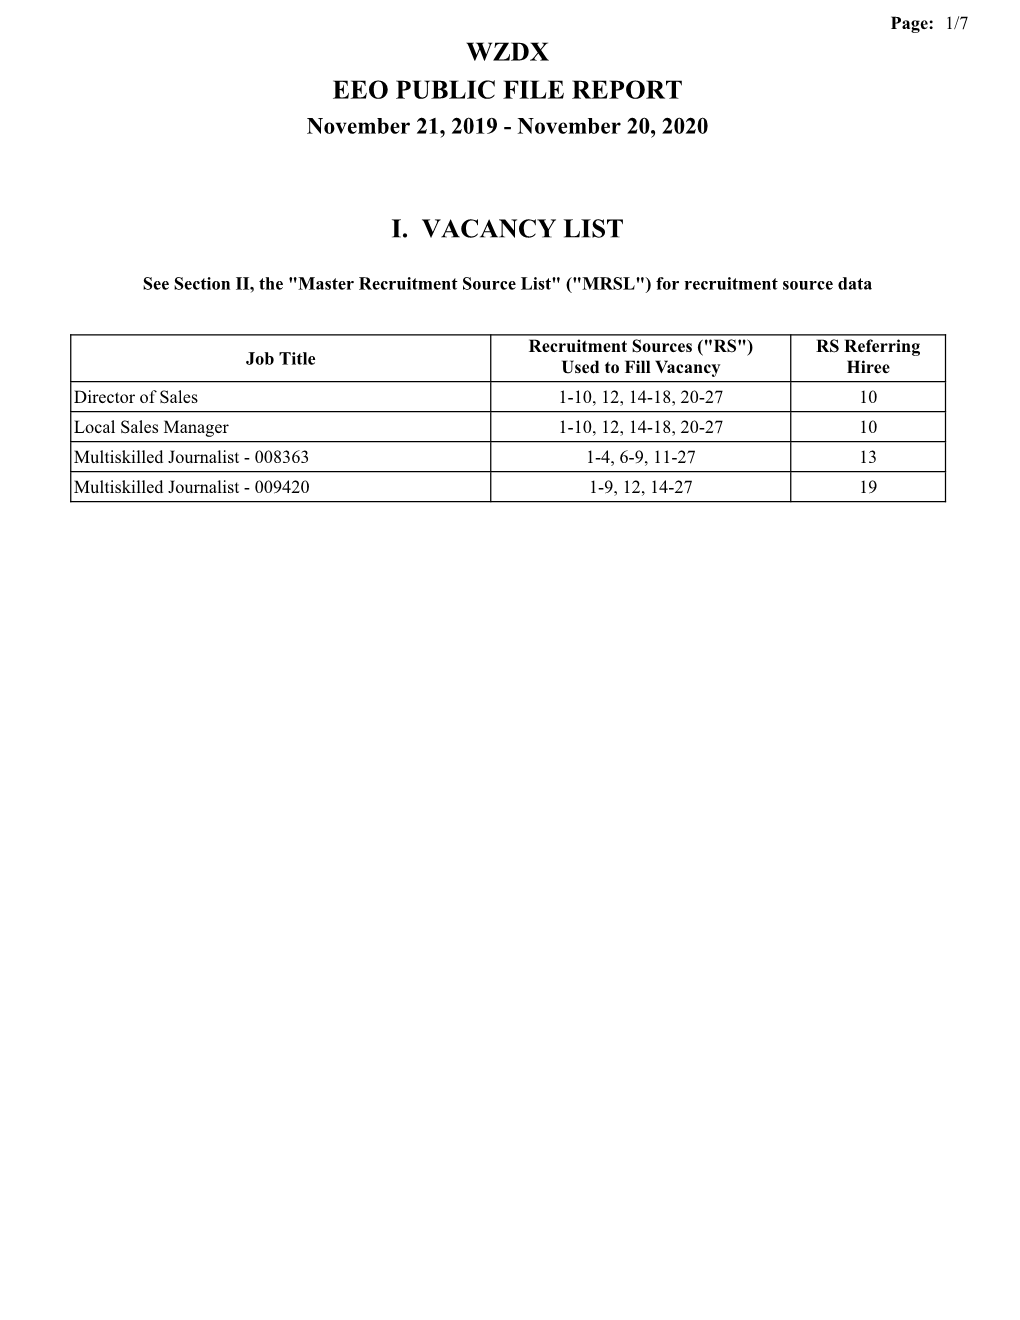 Wzdx Eeo Public File Report I. Vacancy List